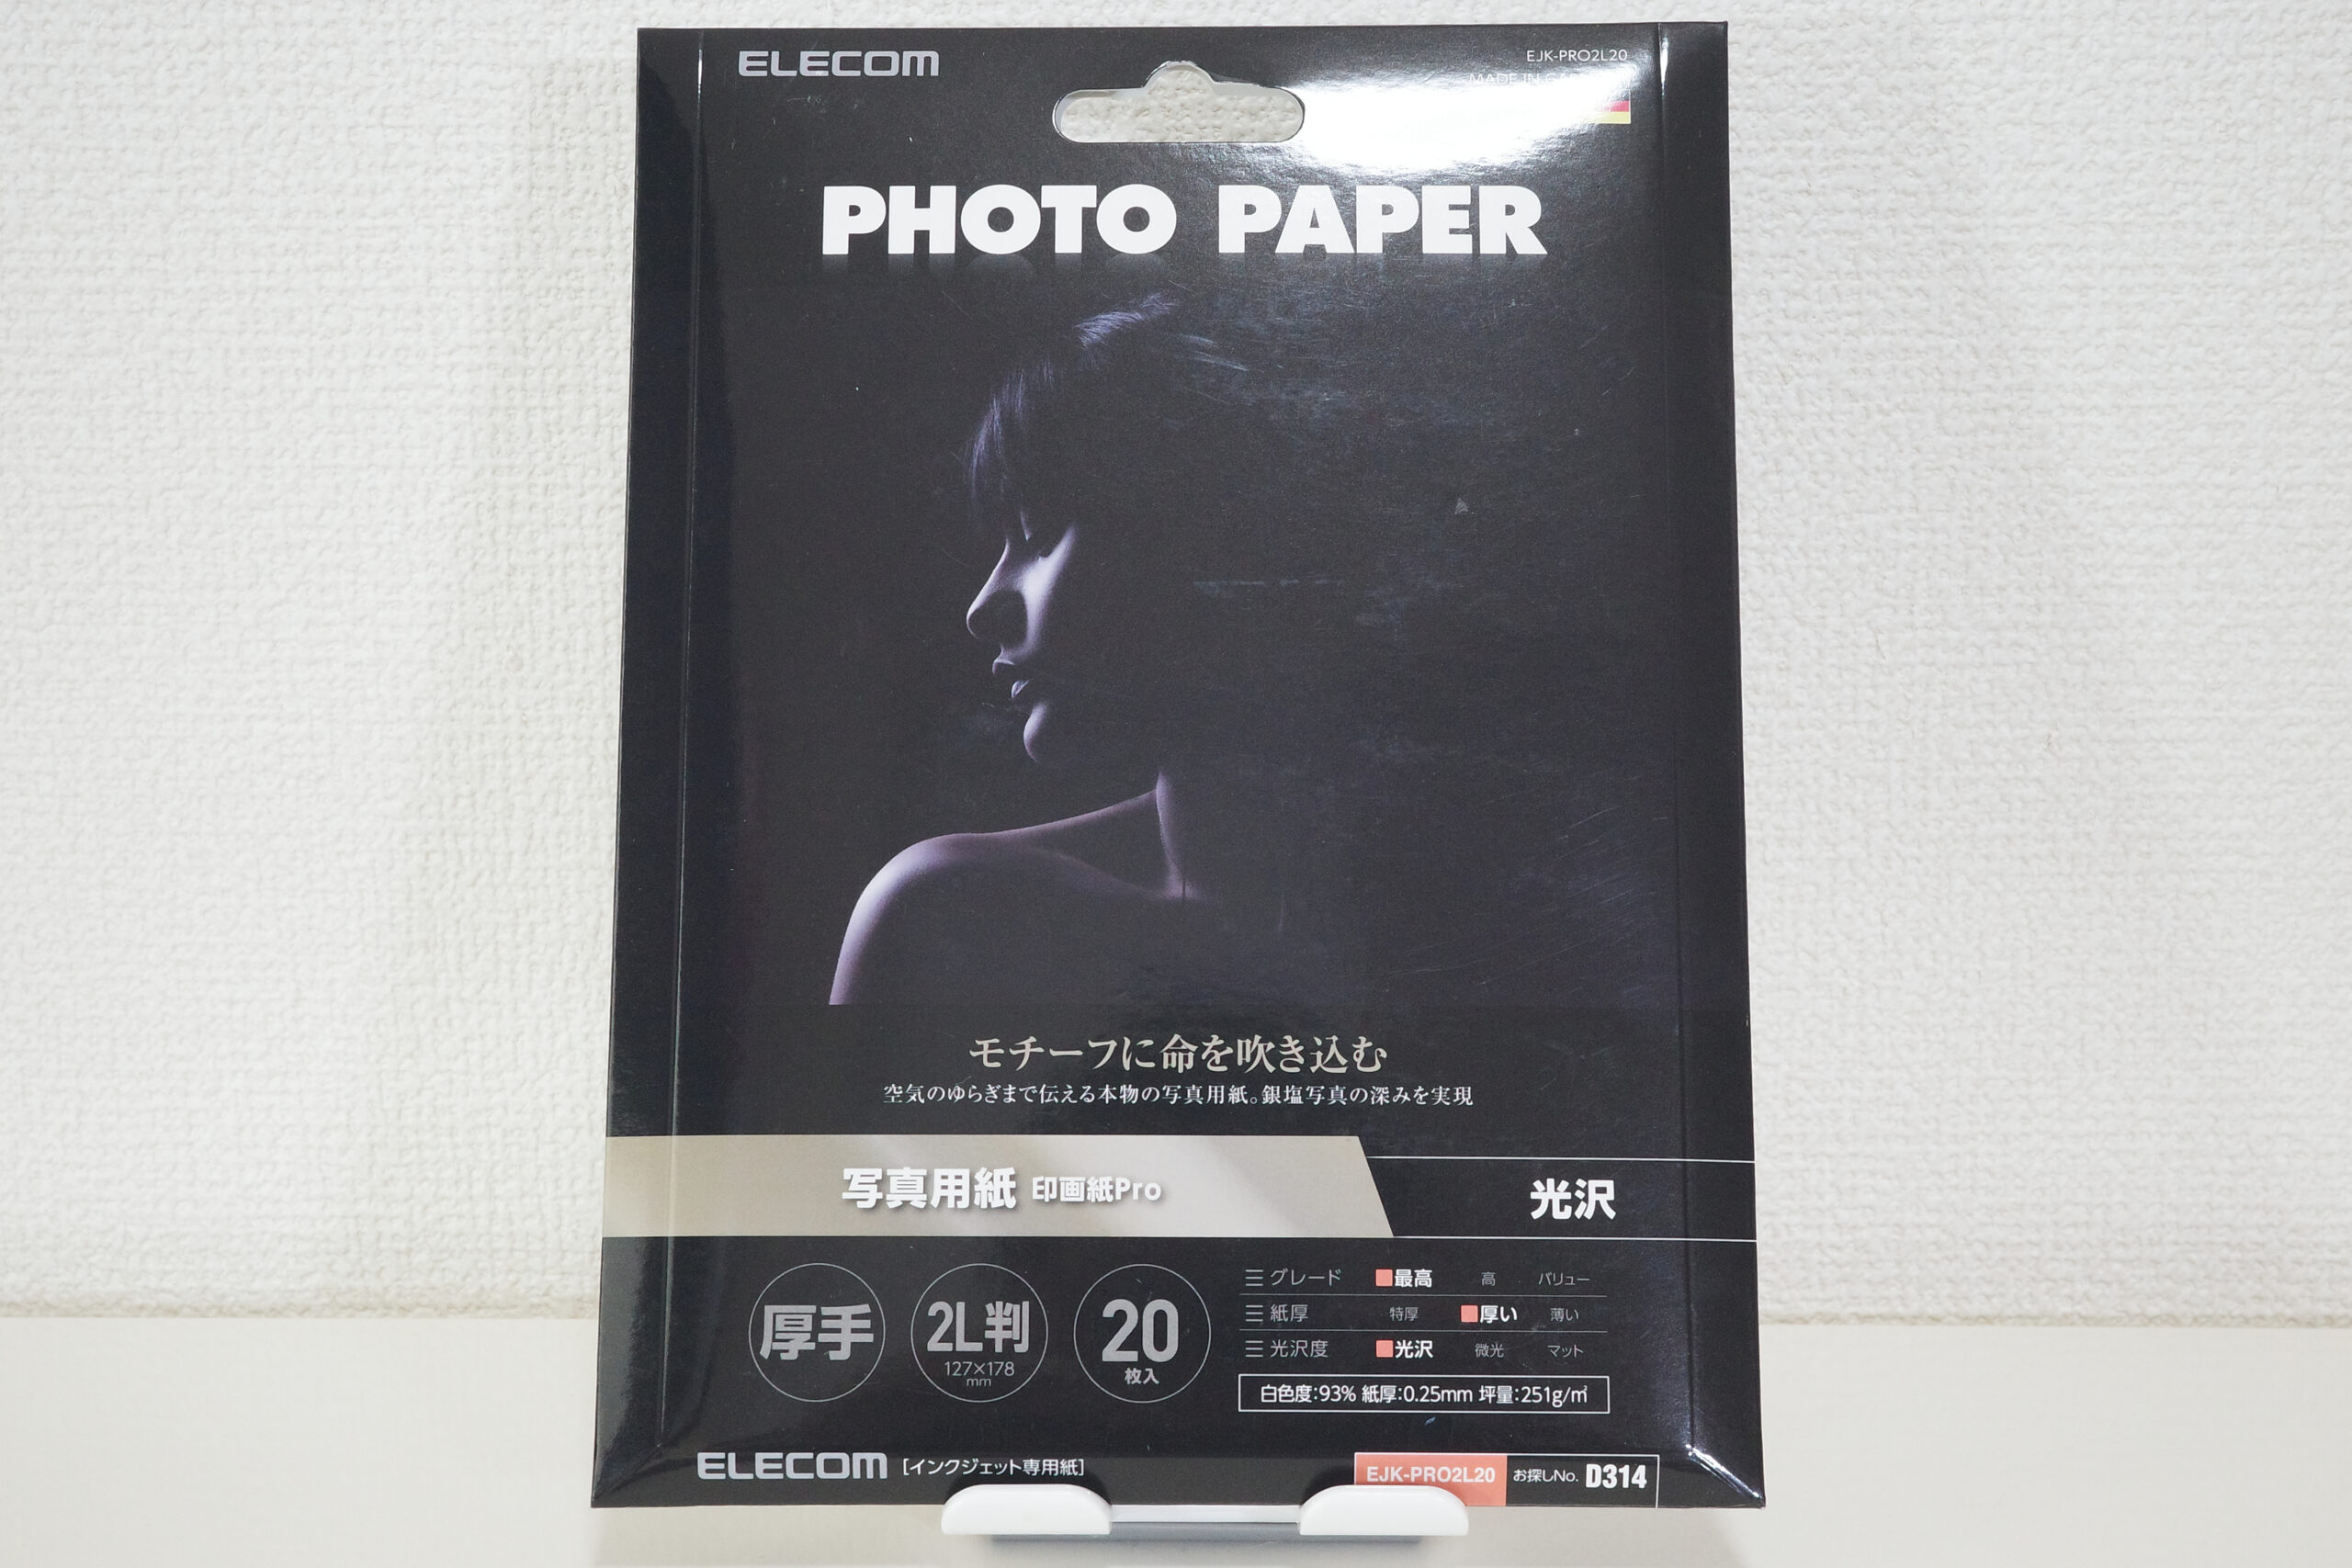 ELECOM 写真用紙 印画紙Pro | 試し印刷・プリント | 写真用紙カタログ